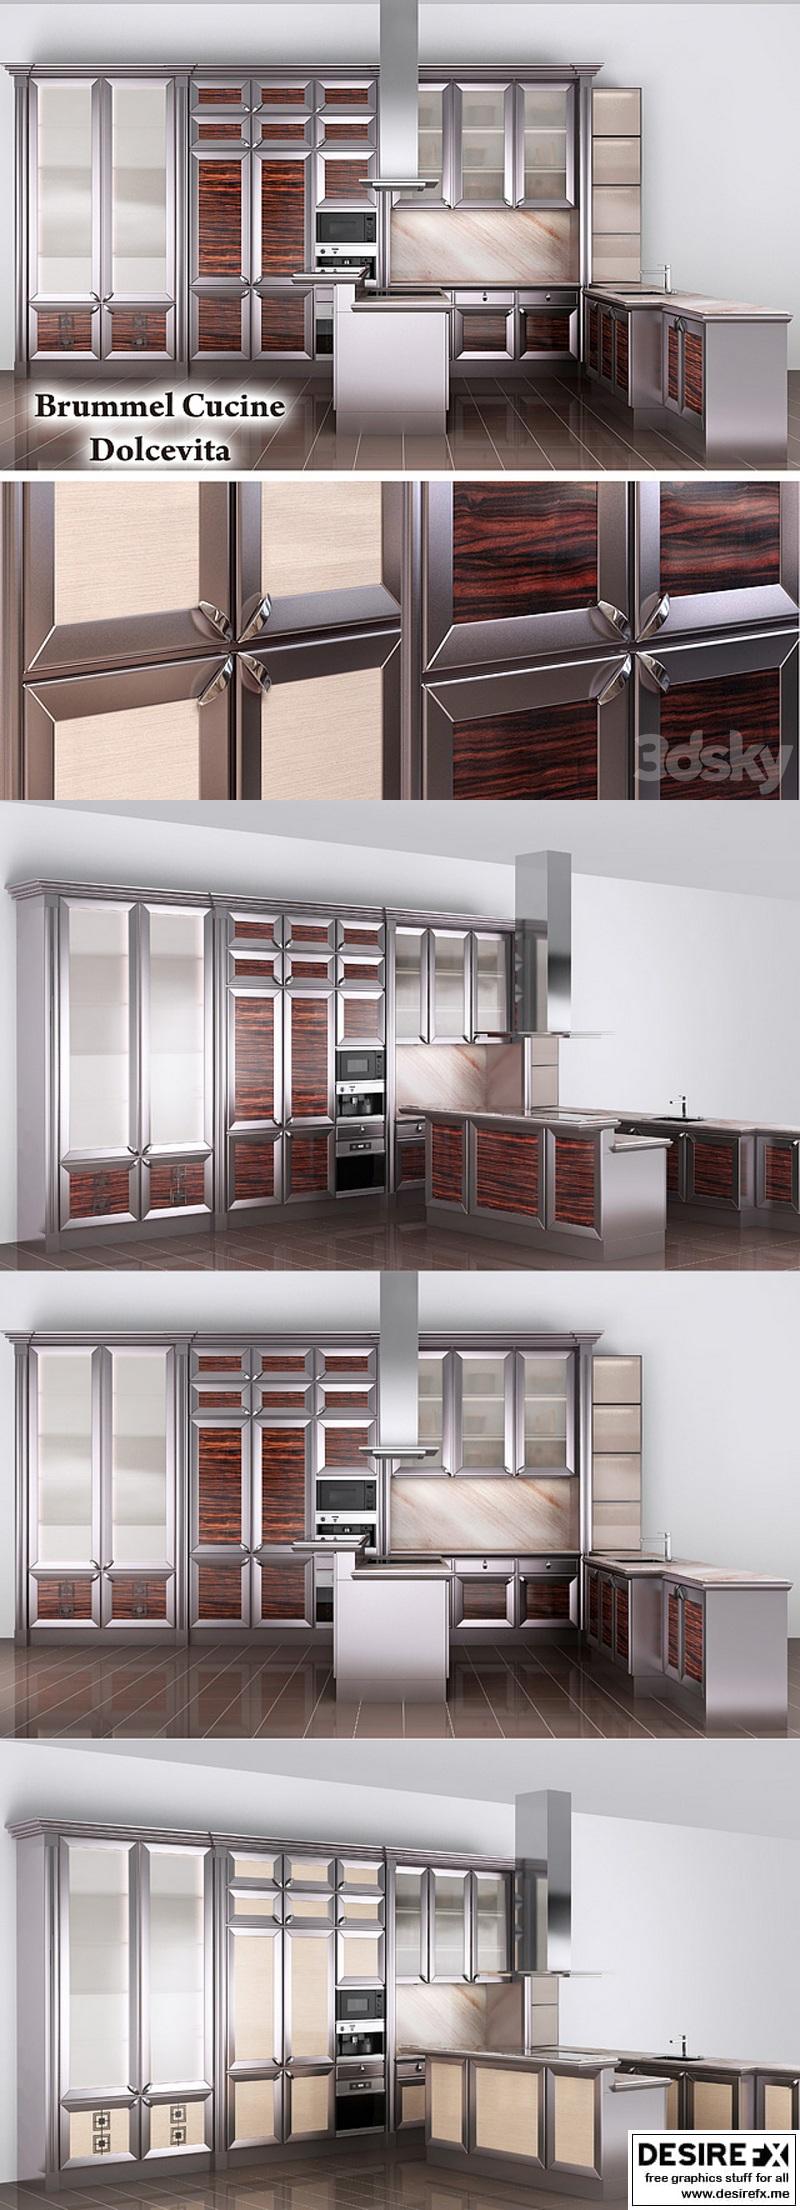 Desire FX 3d models | Kitchen Brummel Cucine Dolcevita – 3D Model